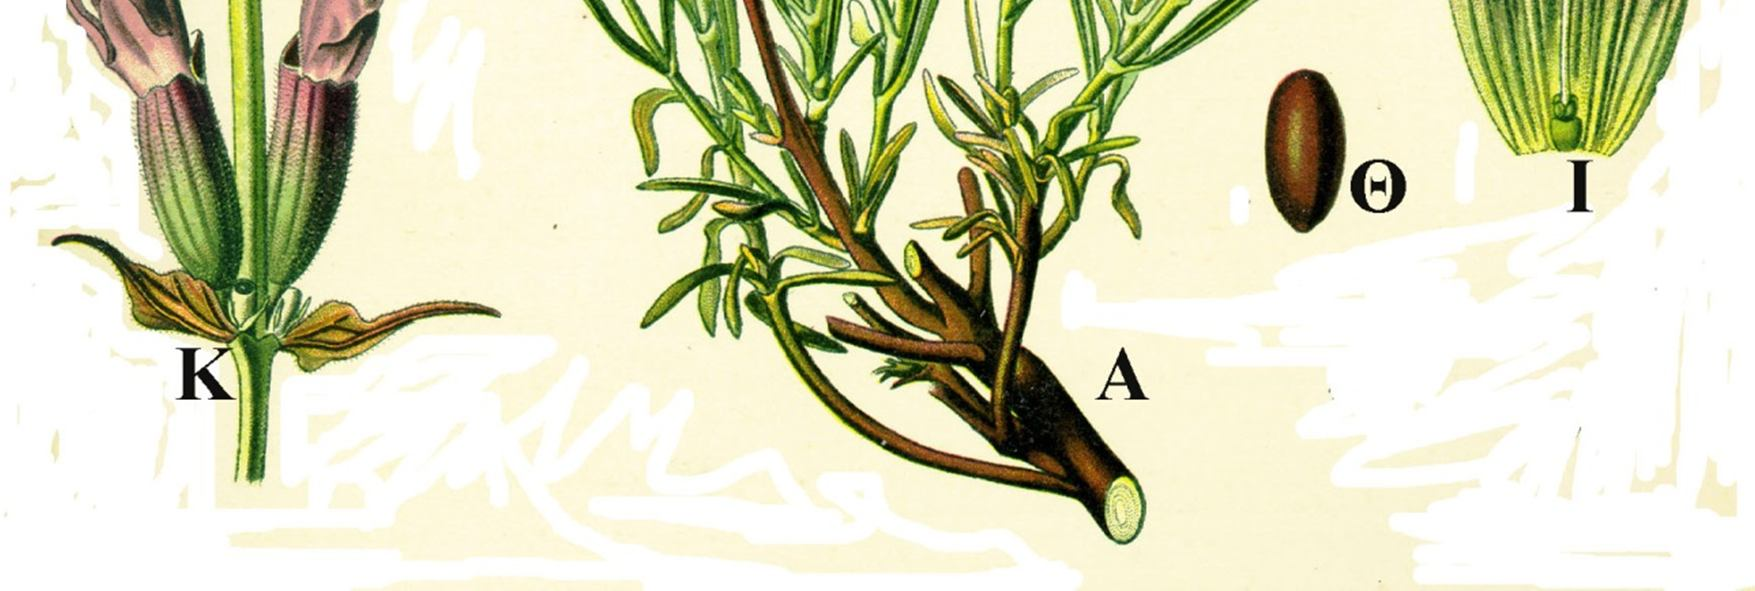 Lavandula angustifolia: Α: απεικόνιση κλαδιού με φύλλα και άνθη τοποθετημένα κατά σπονδύλους, Β: τομή ζυγόμορφου κάλυκα και στεφάνης, διακρίνονται οι επιπέπαλοι στήμονες, ο γυνοβασικός στύλος και τα